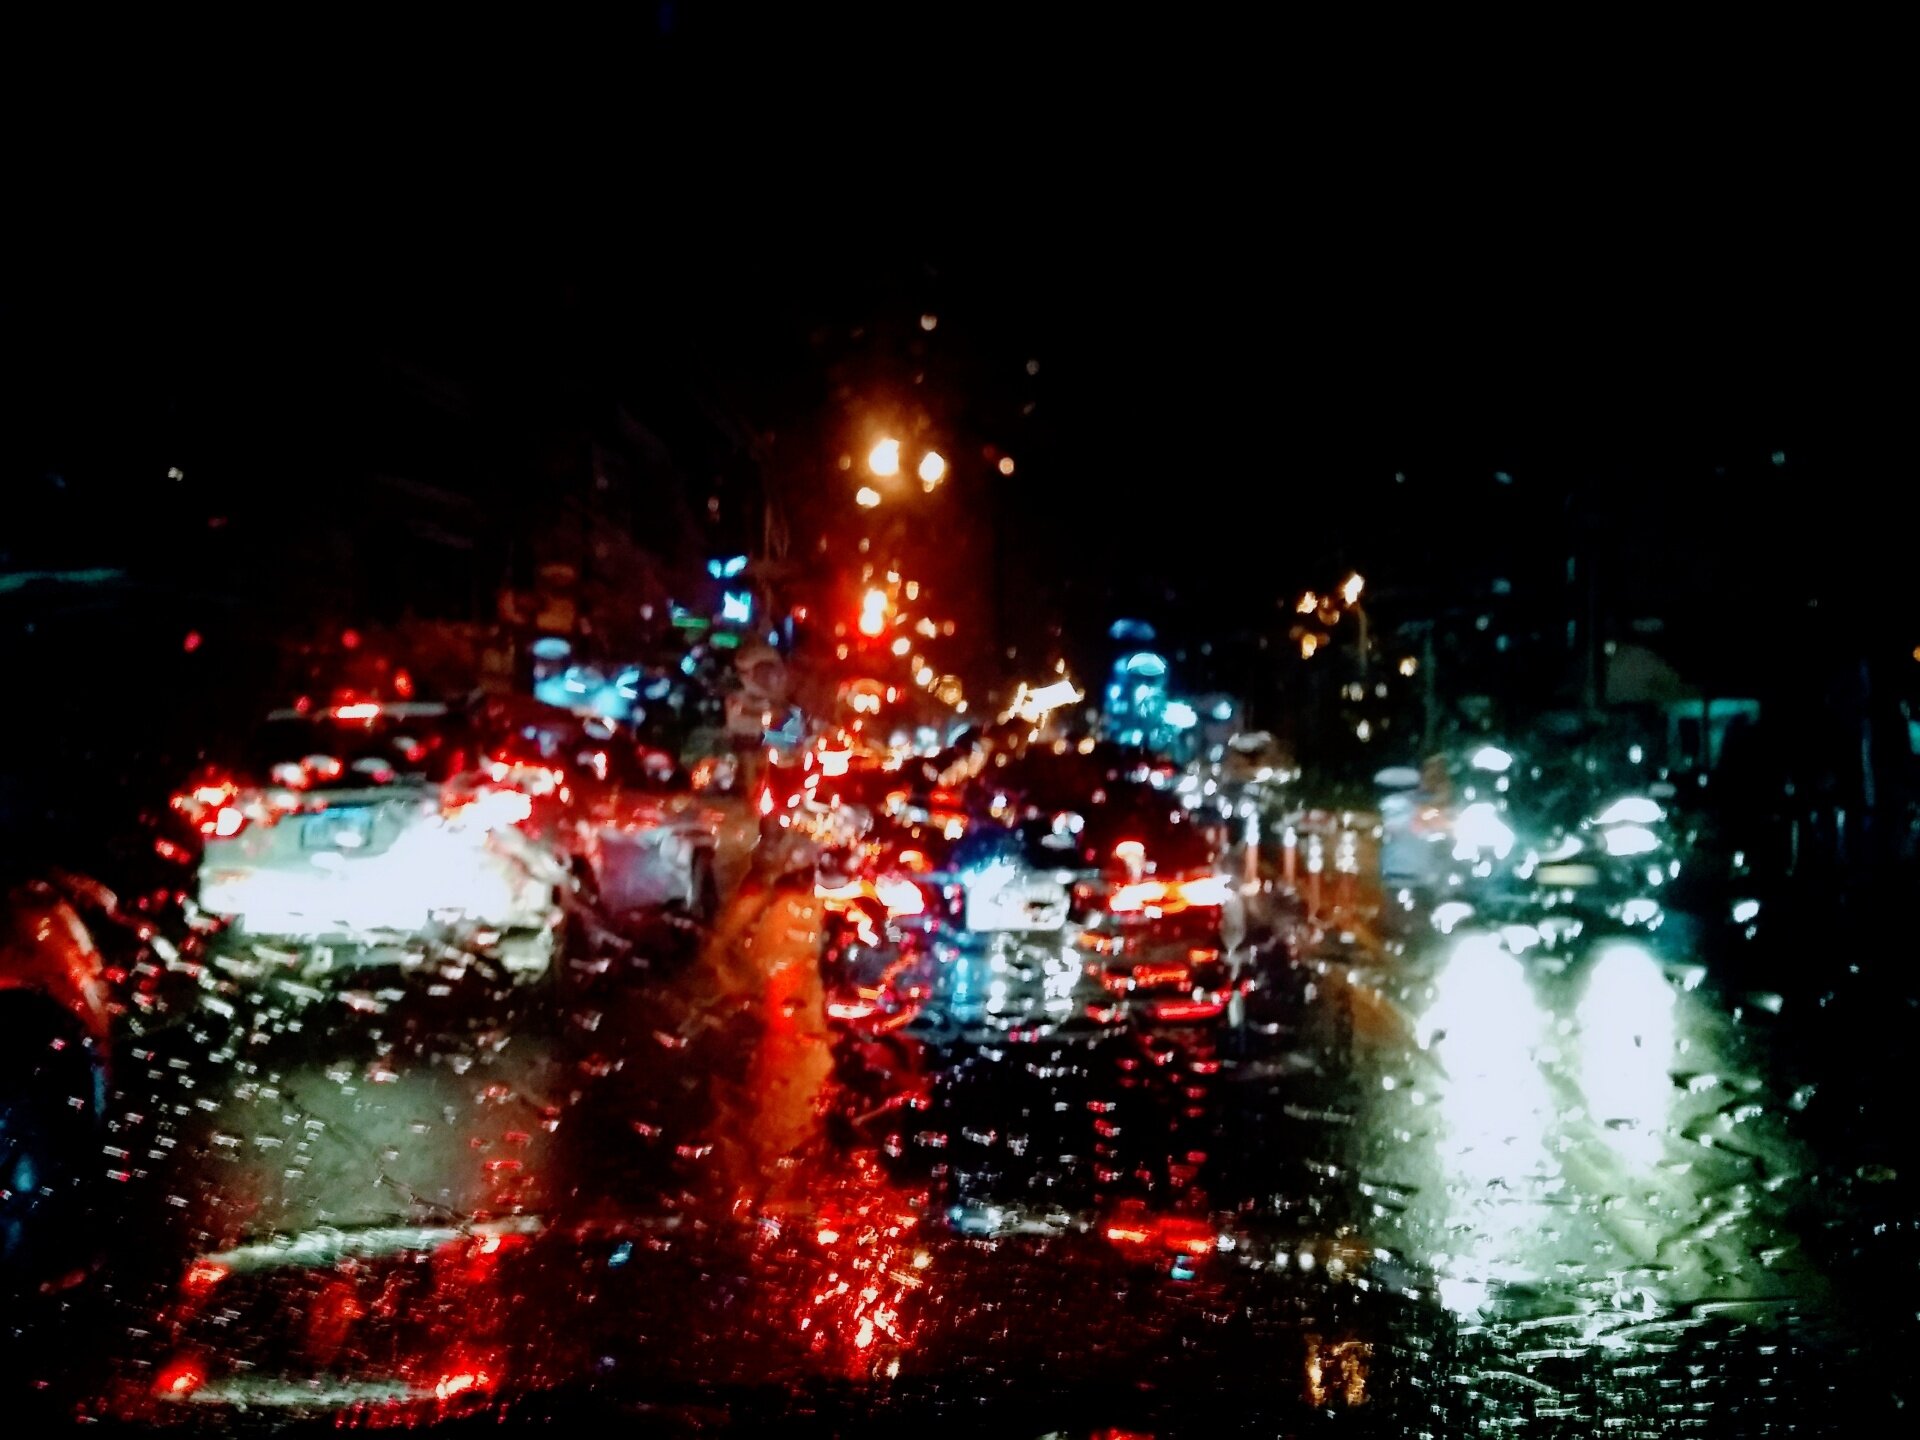 night-driving-in-rain.jpg